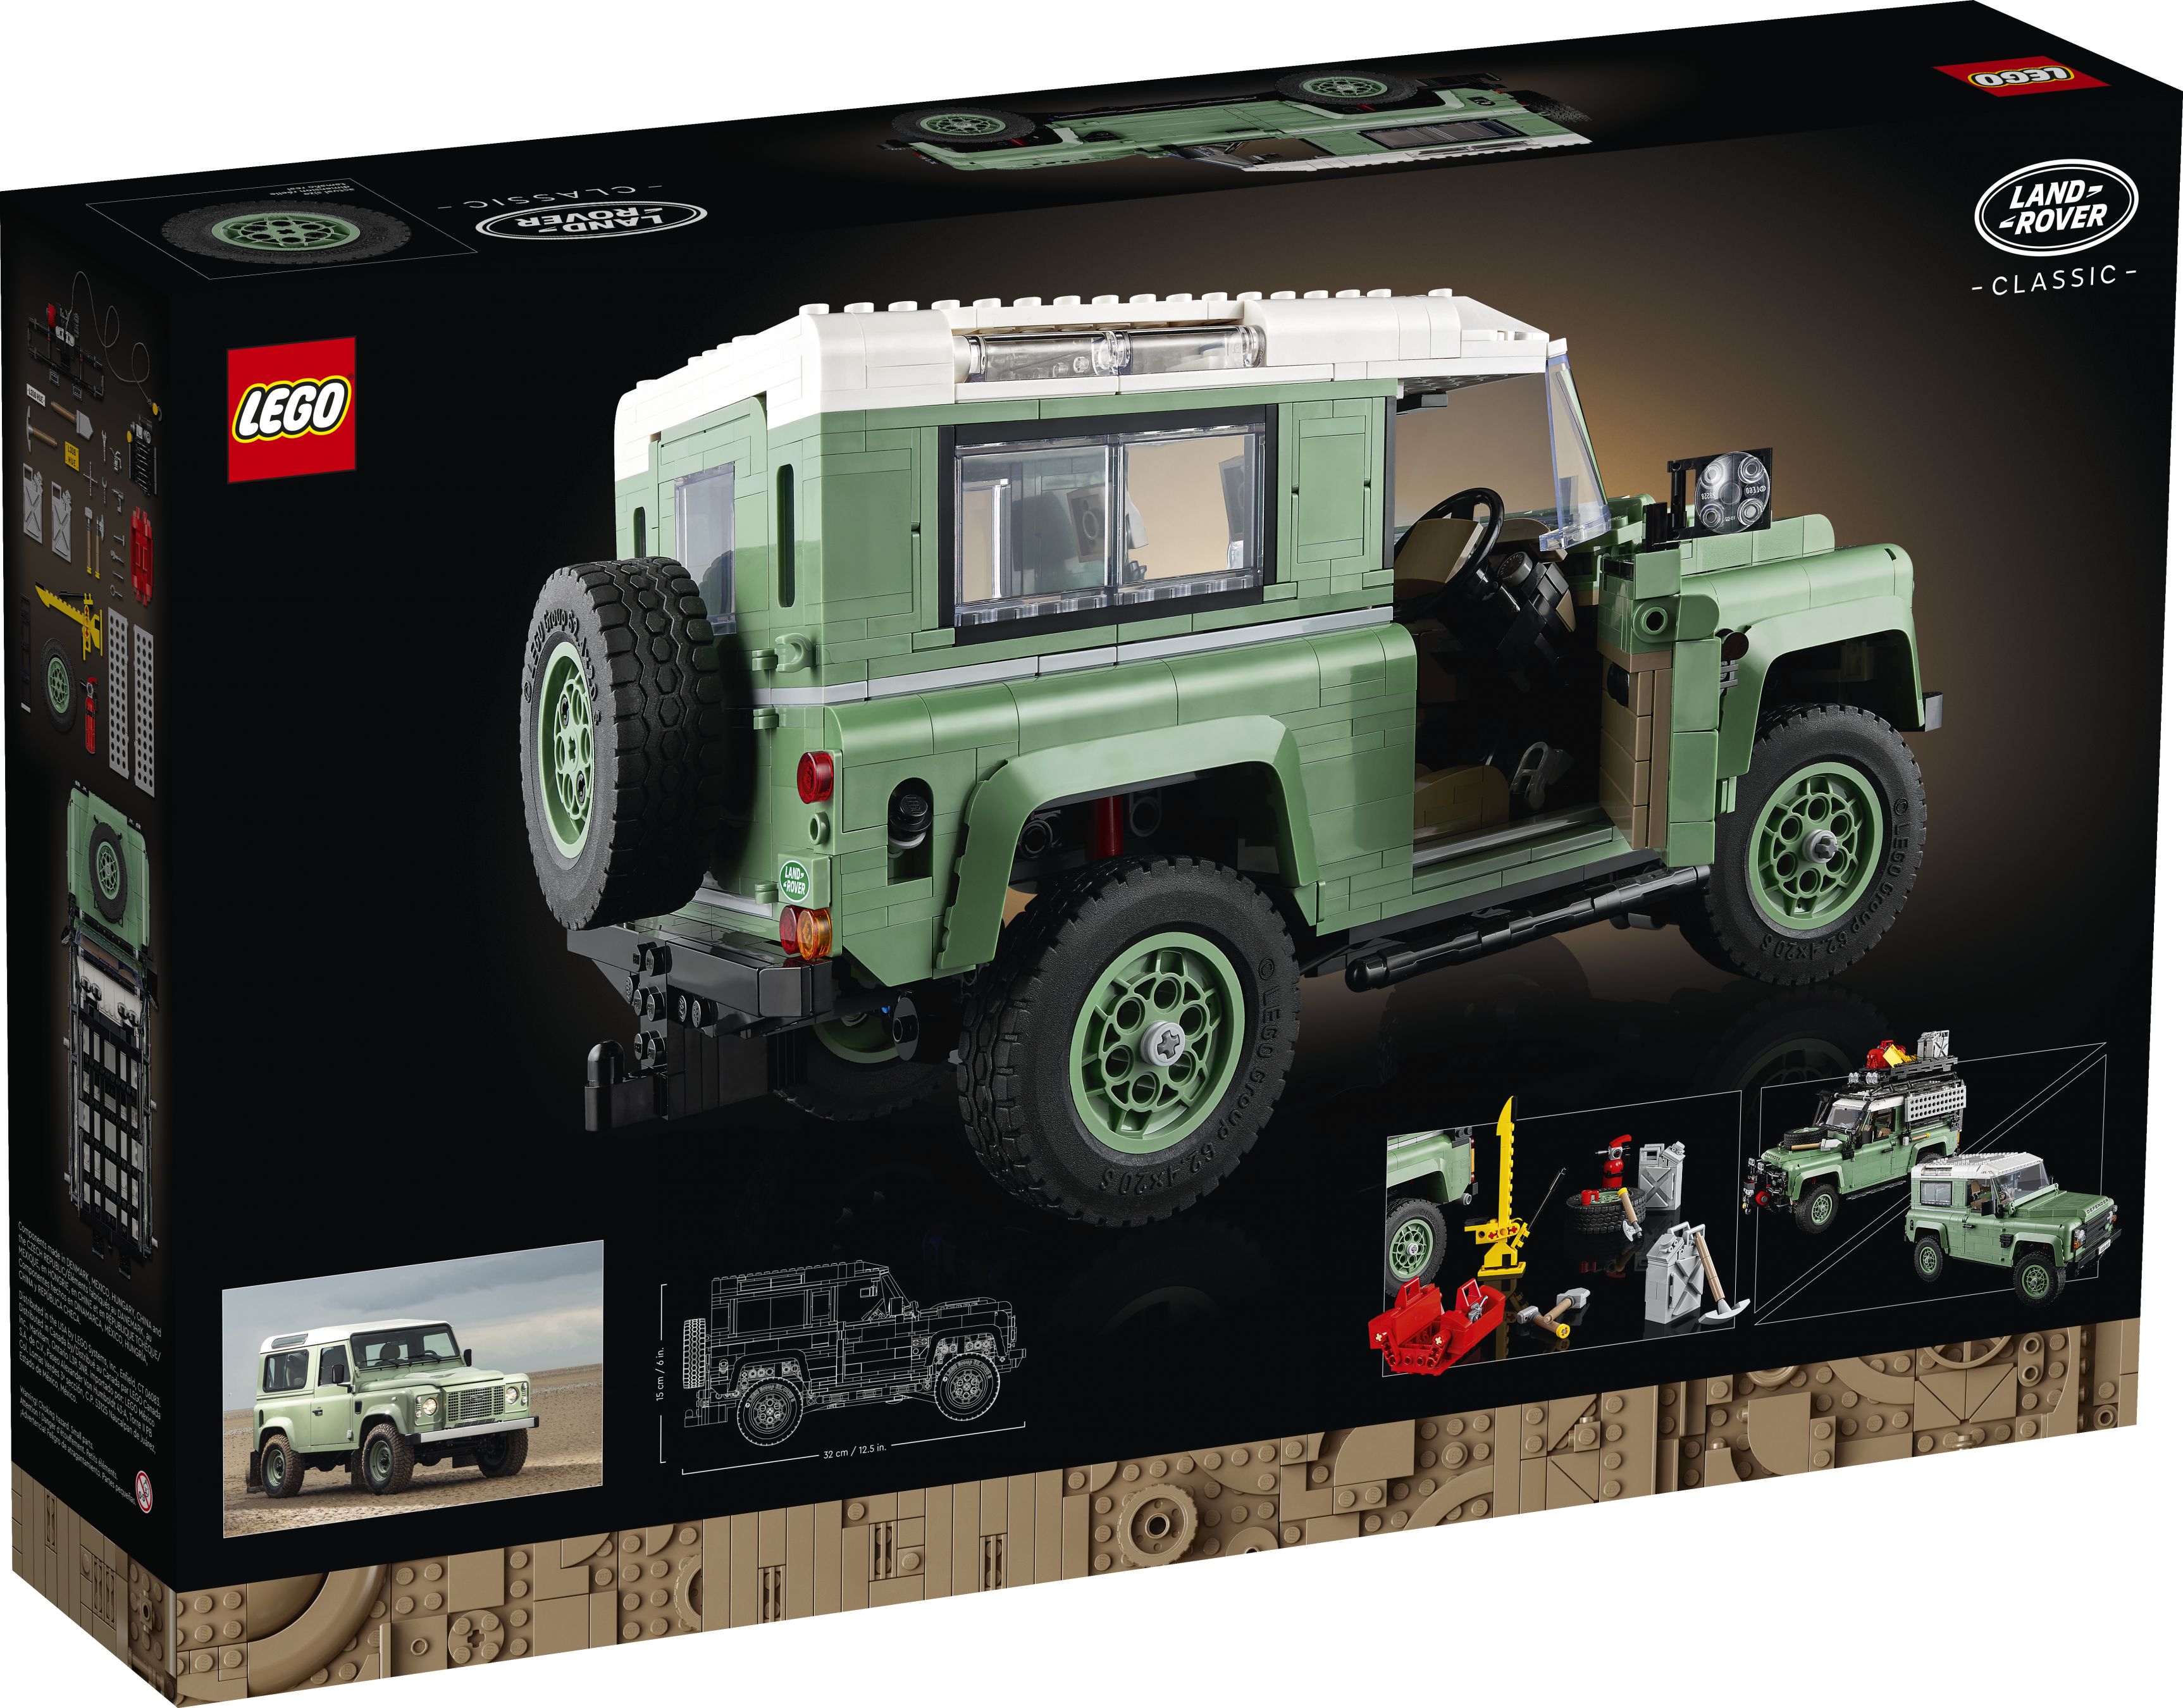 LEGO Advanced Models 10317 Land Rover Classic Defender 90 LEGO_10317_Box5_v39.jpg